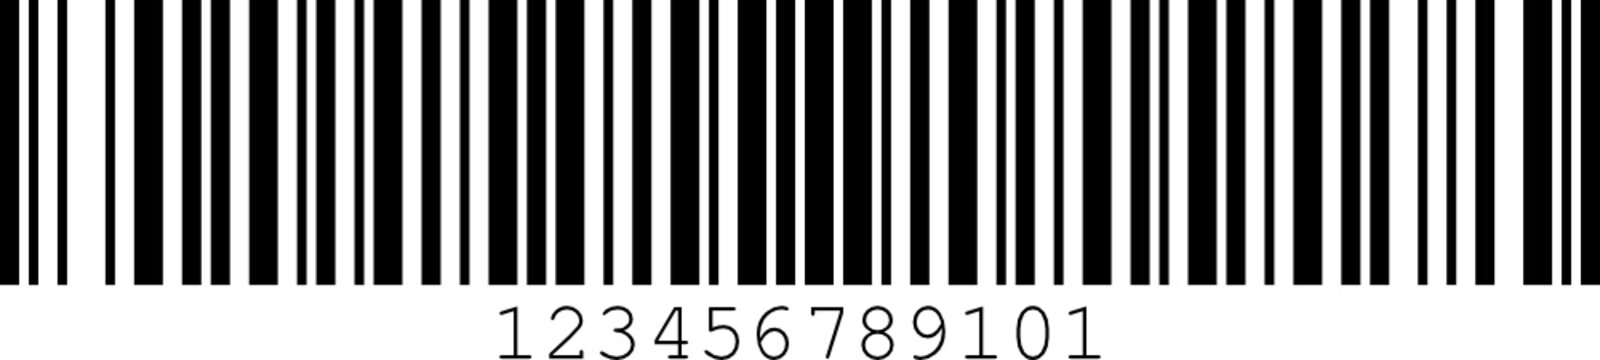 Code 128B Barcode Standard